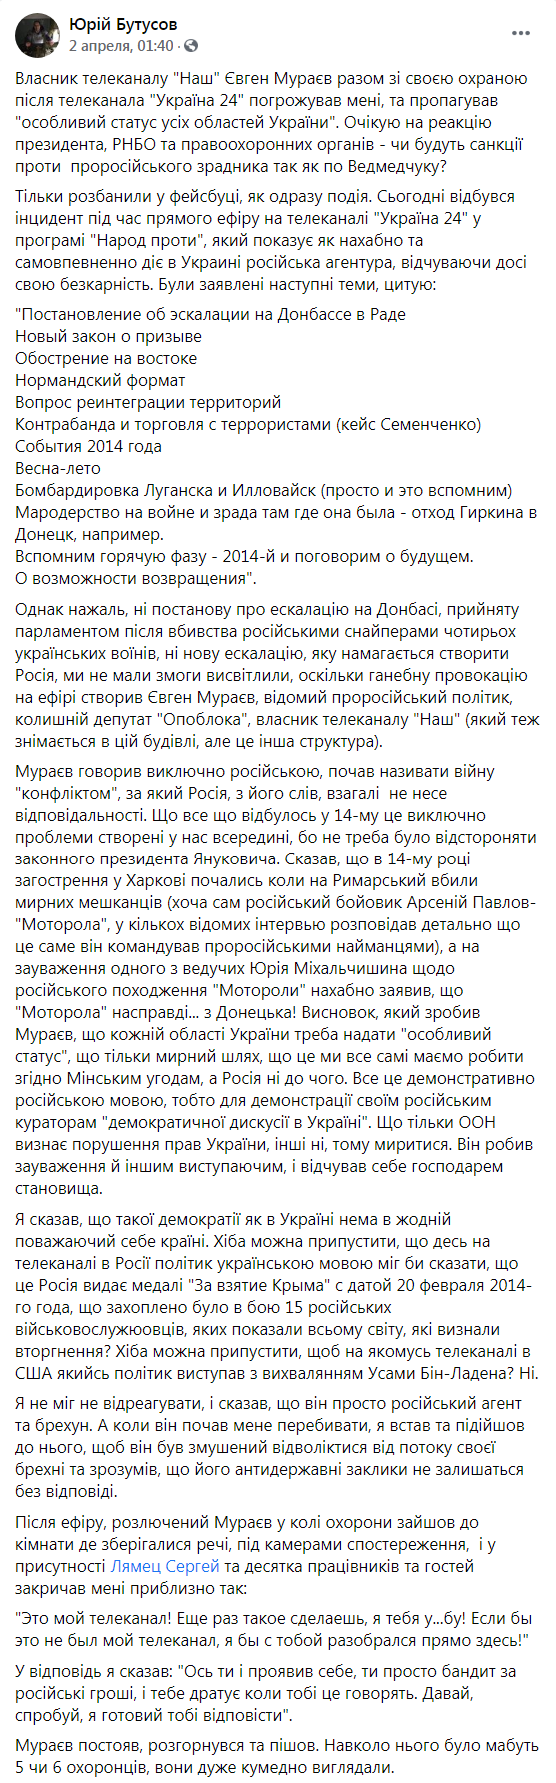 Скриншот из Фейсбука Юрия Бутусова